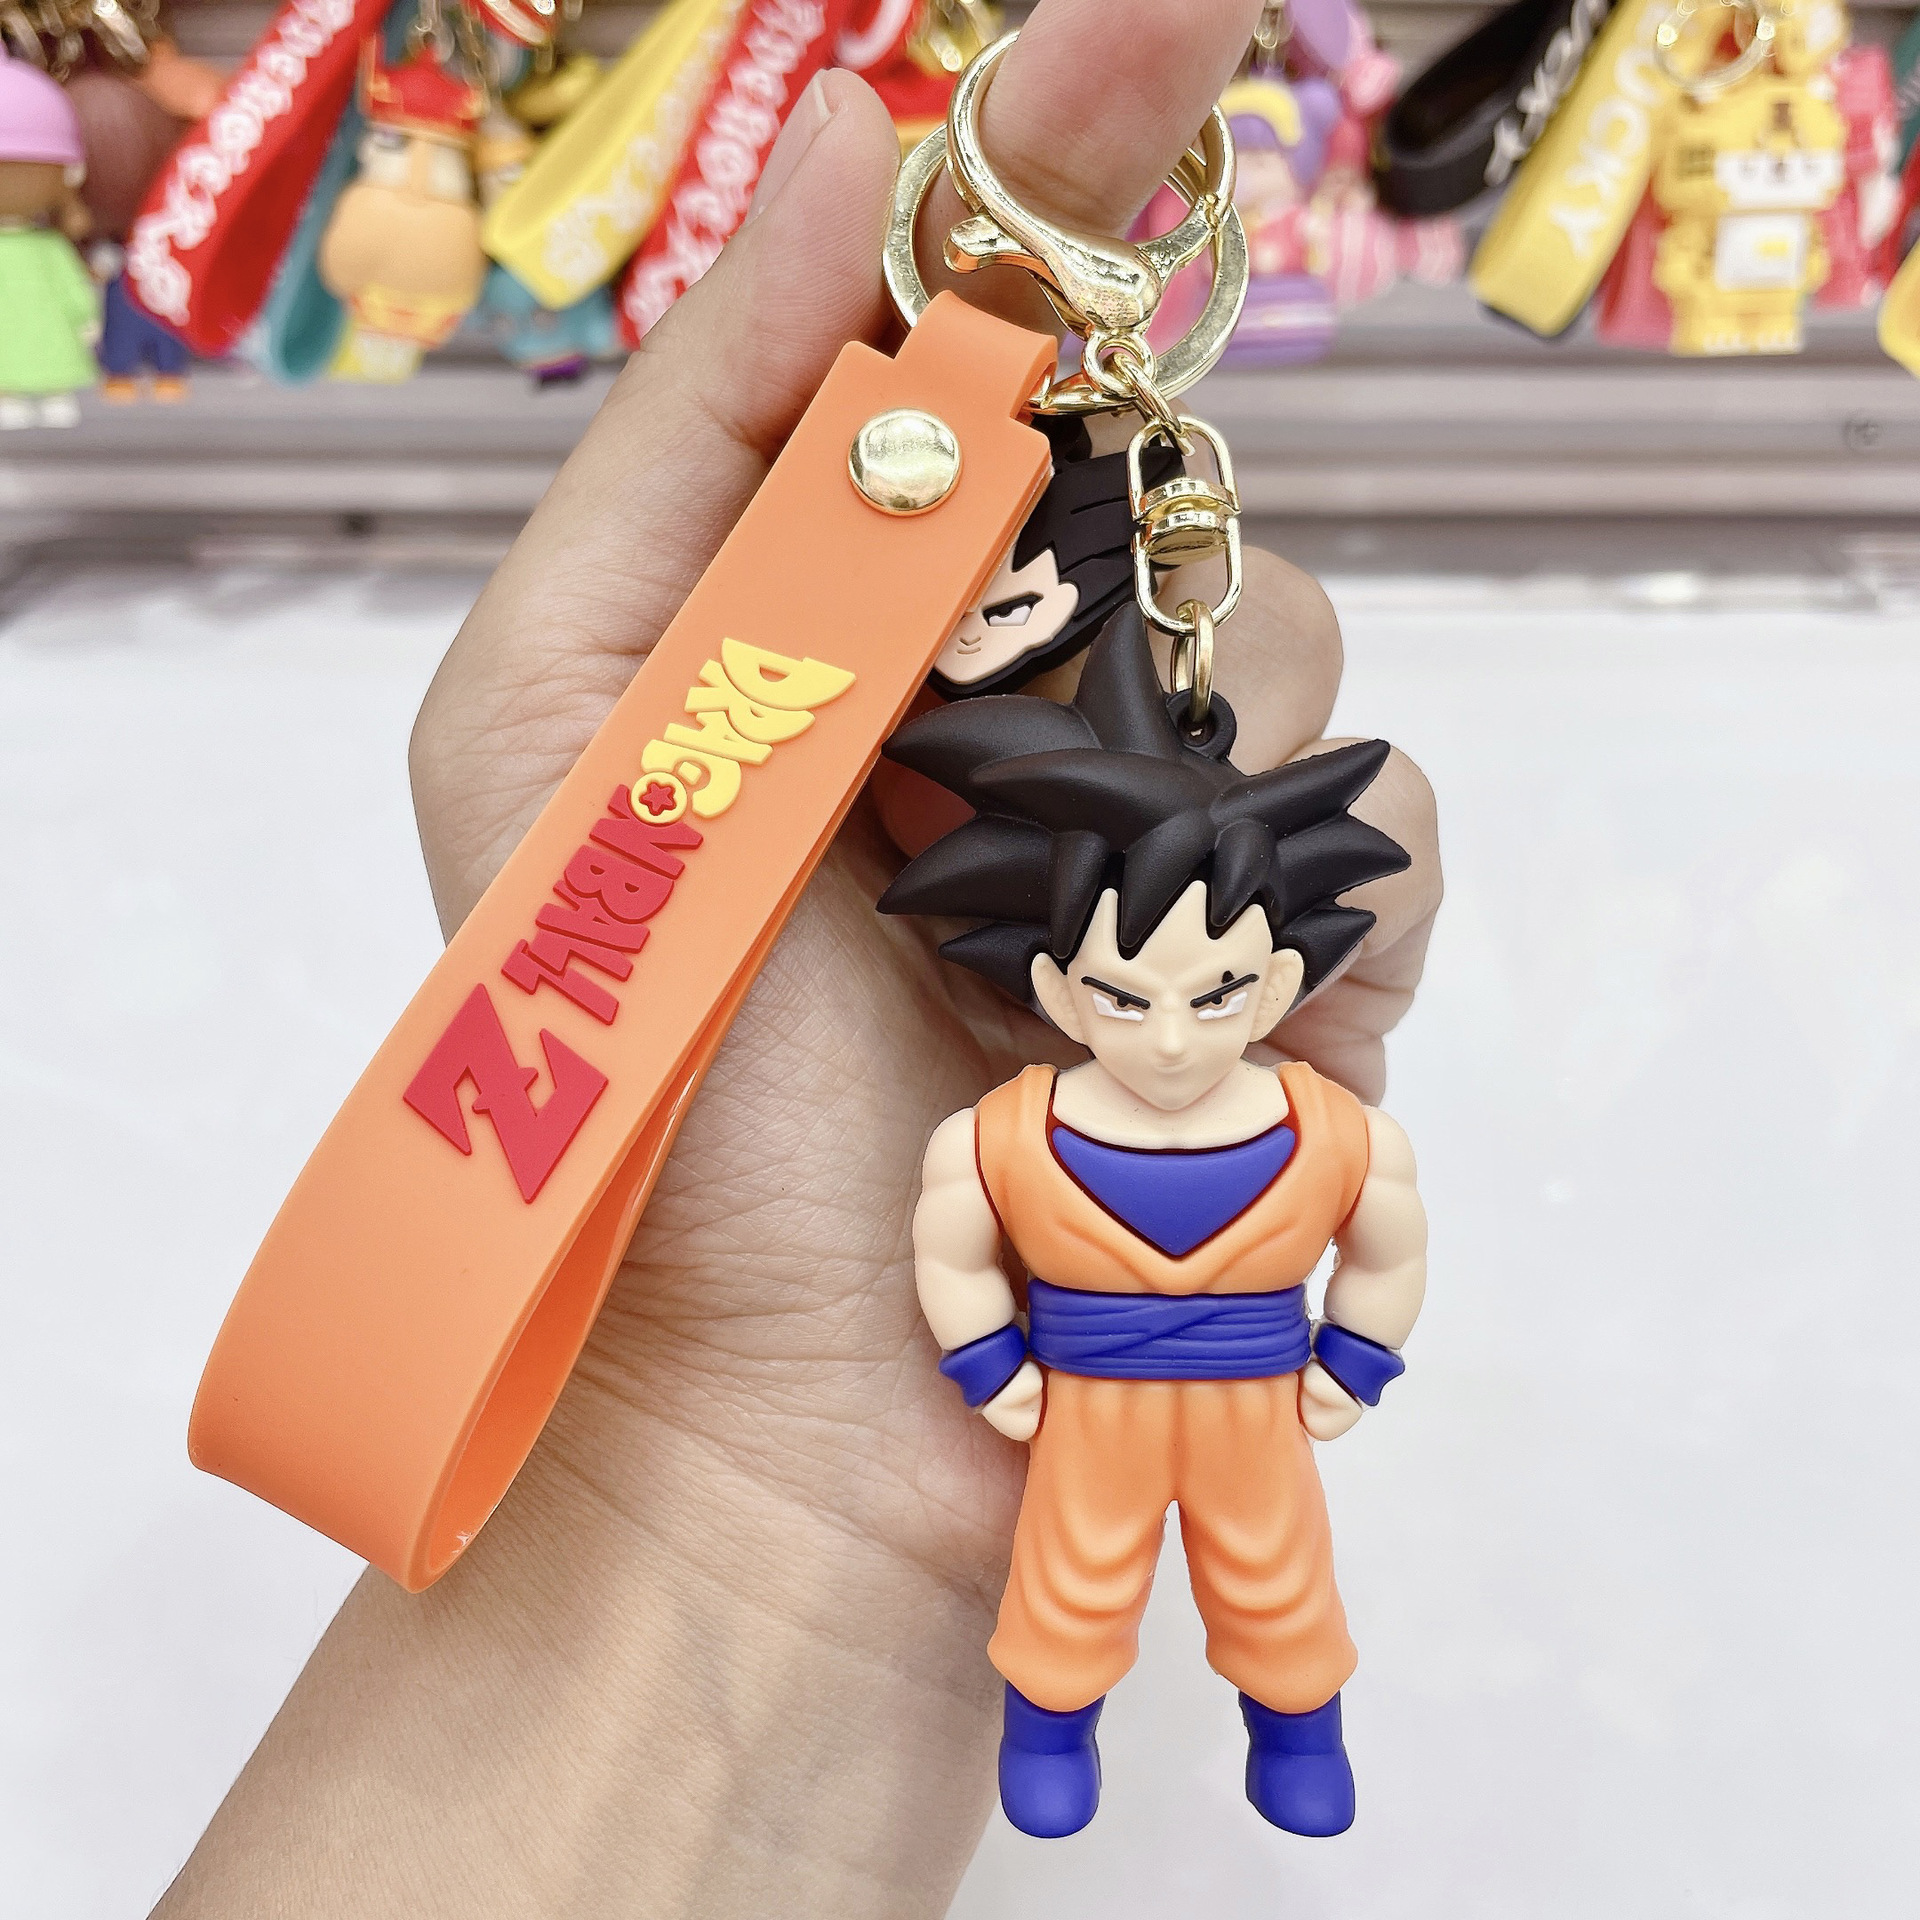 New Dragon Ball Saiyan Doll Keychain Pendant Creative Monkey King Cars and Bags Small Ornaments Wholesale